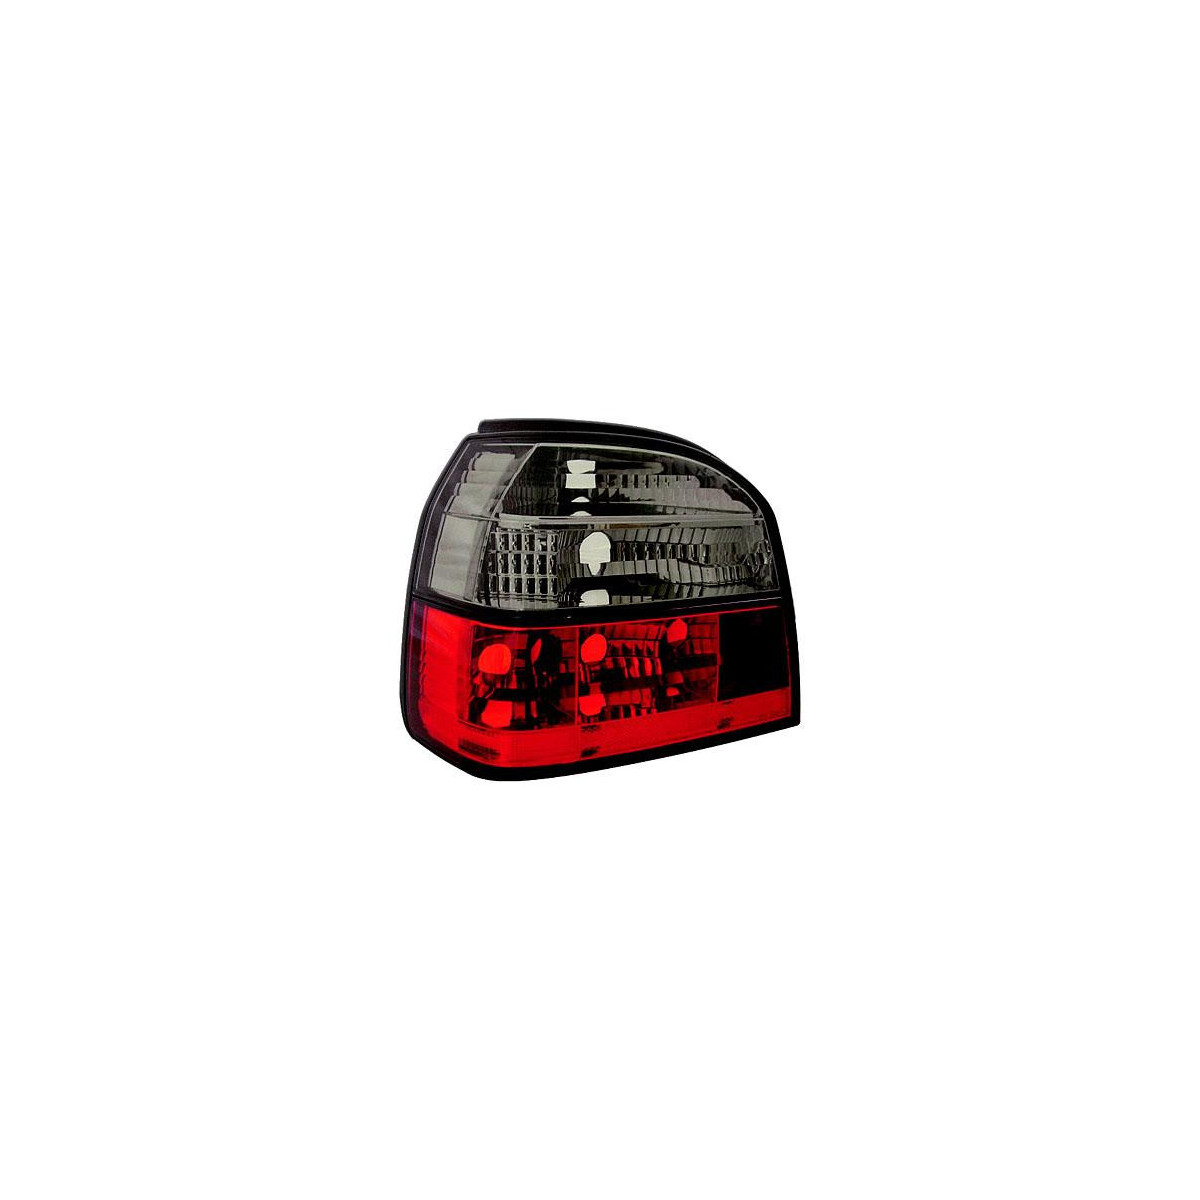 LAMPY TYLNE VW GOLF 3 91-98 RED SMOKE